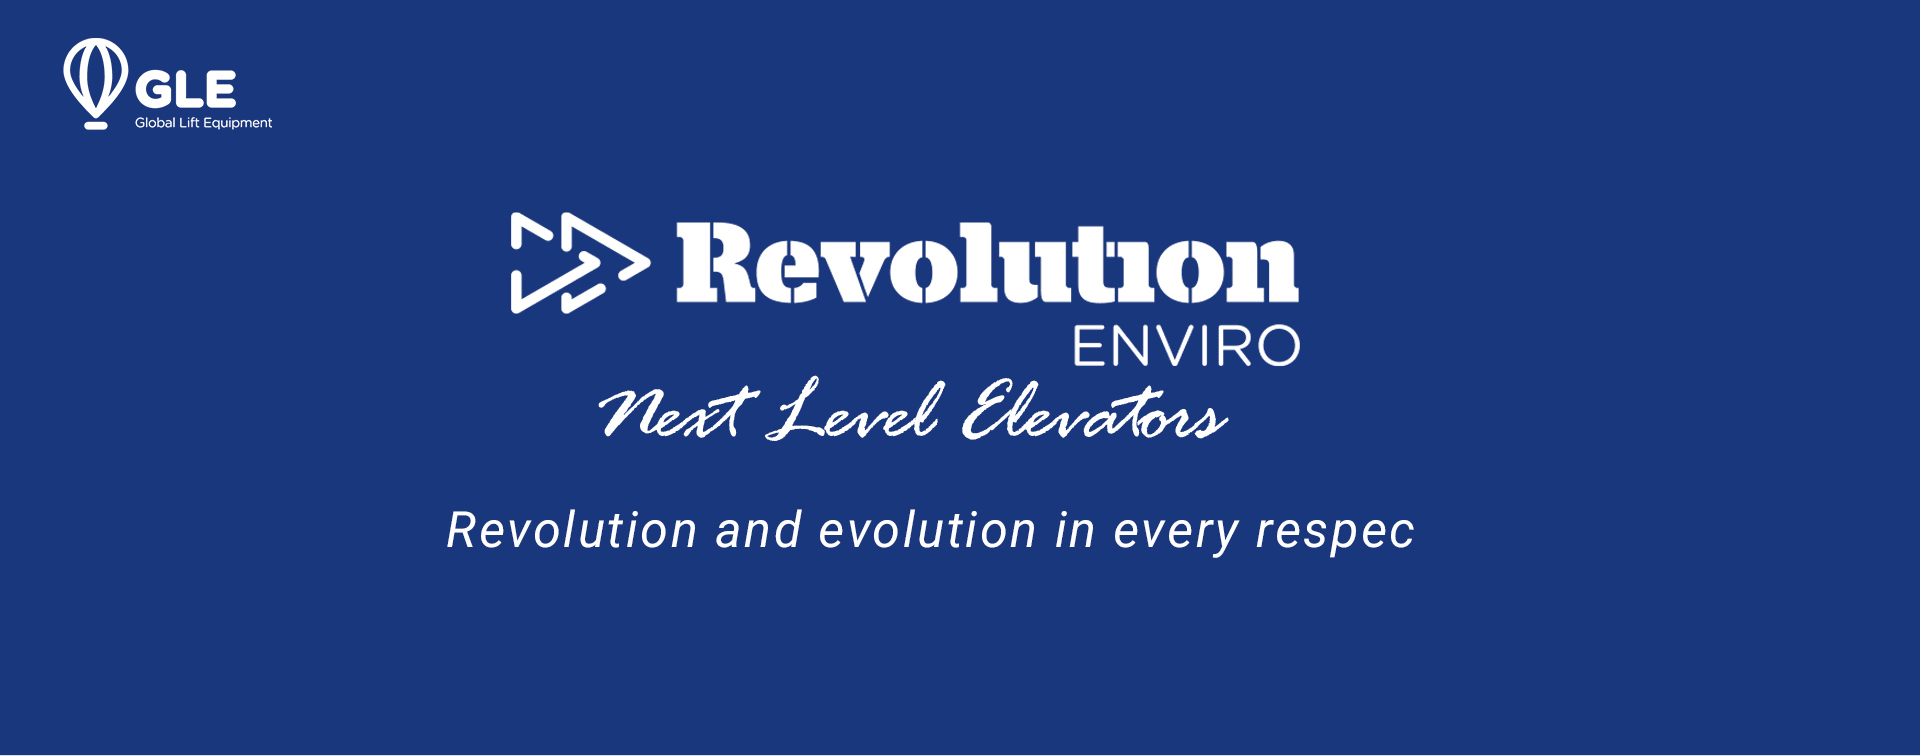 Revolution and evolution in every respect: Enviro REVOLUTION®